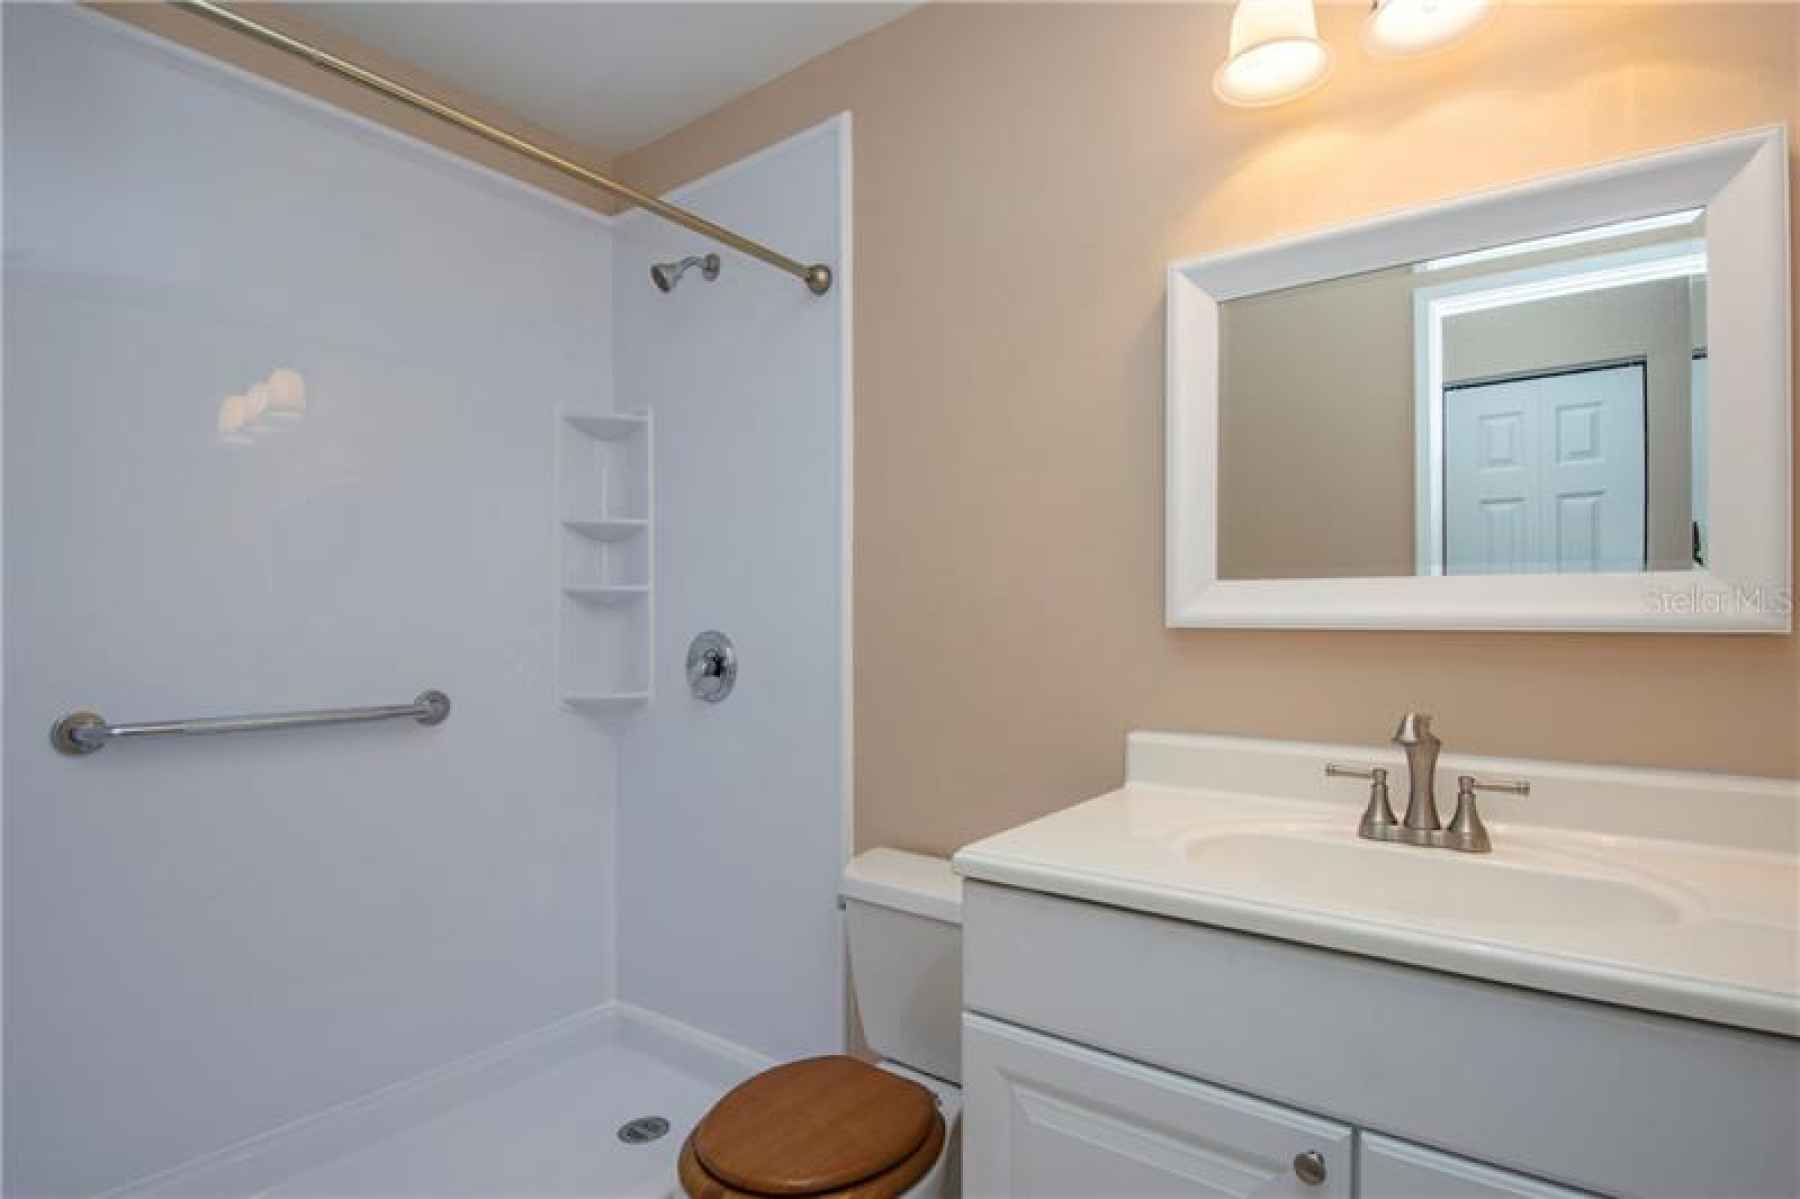 Updated Bathroom with walk-in shower with handicap handrails.